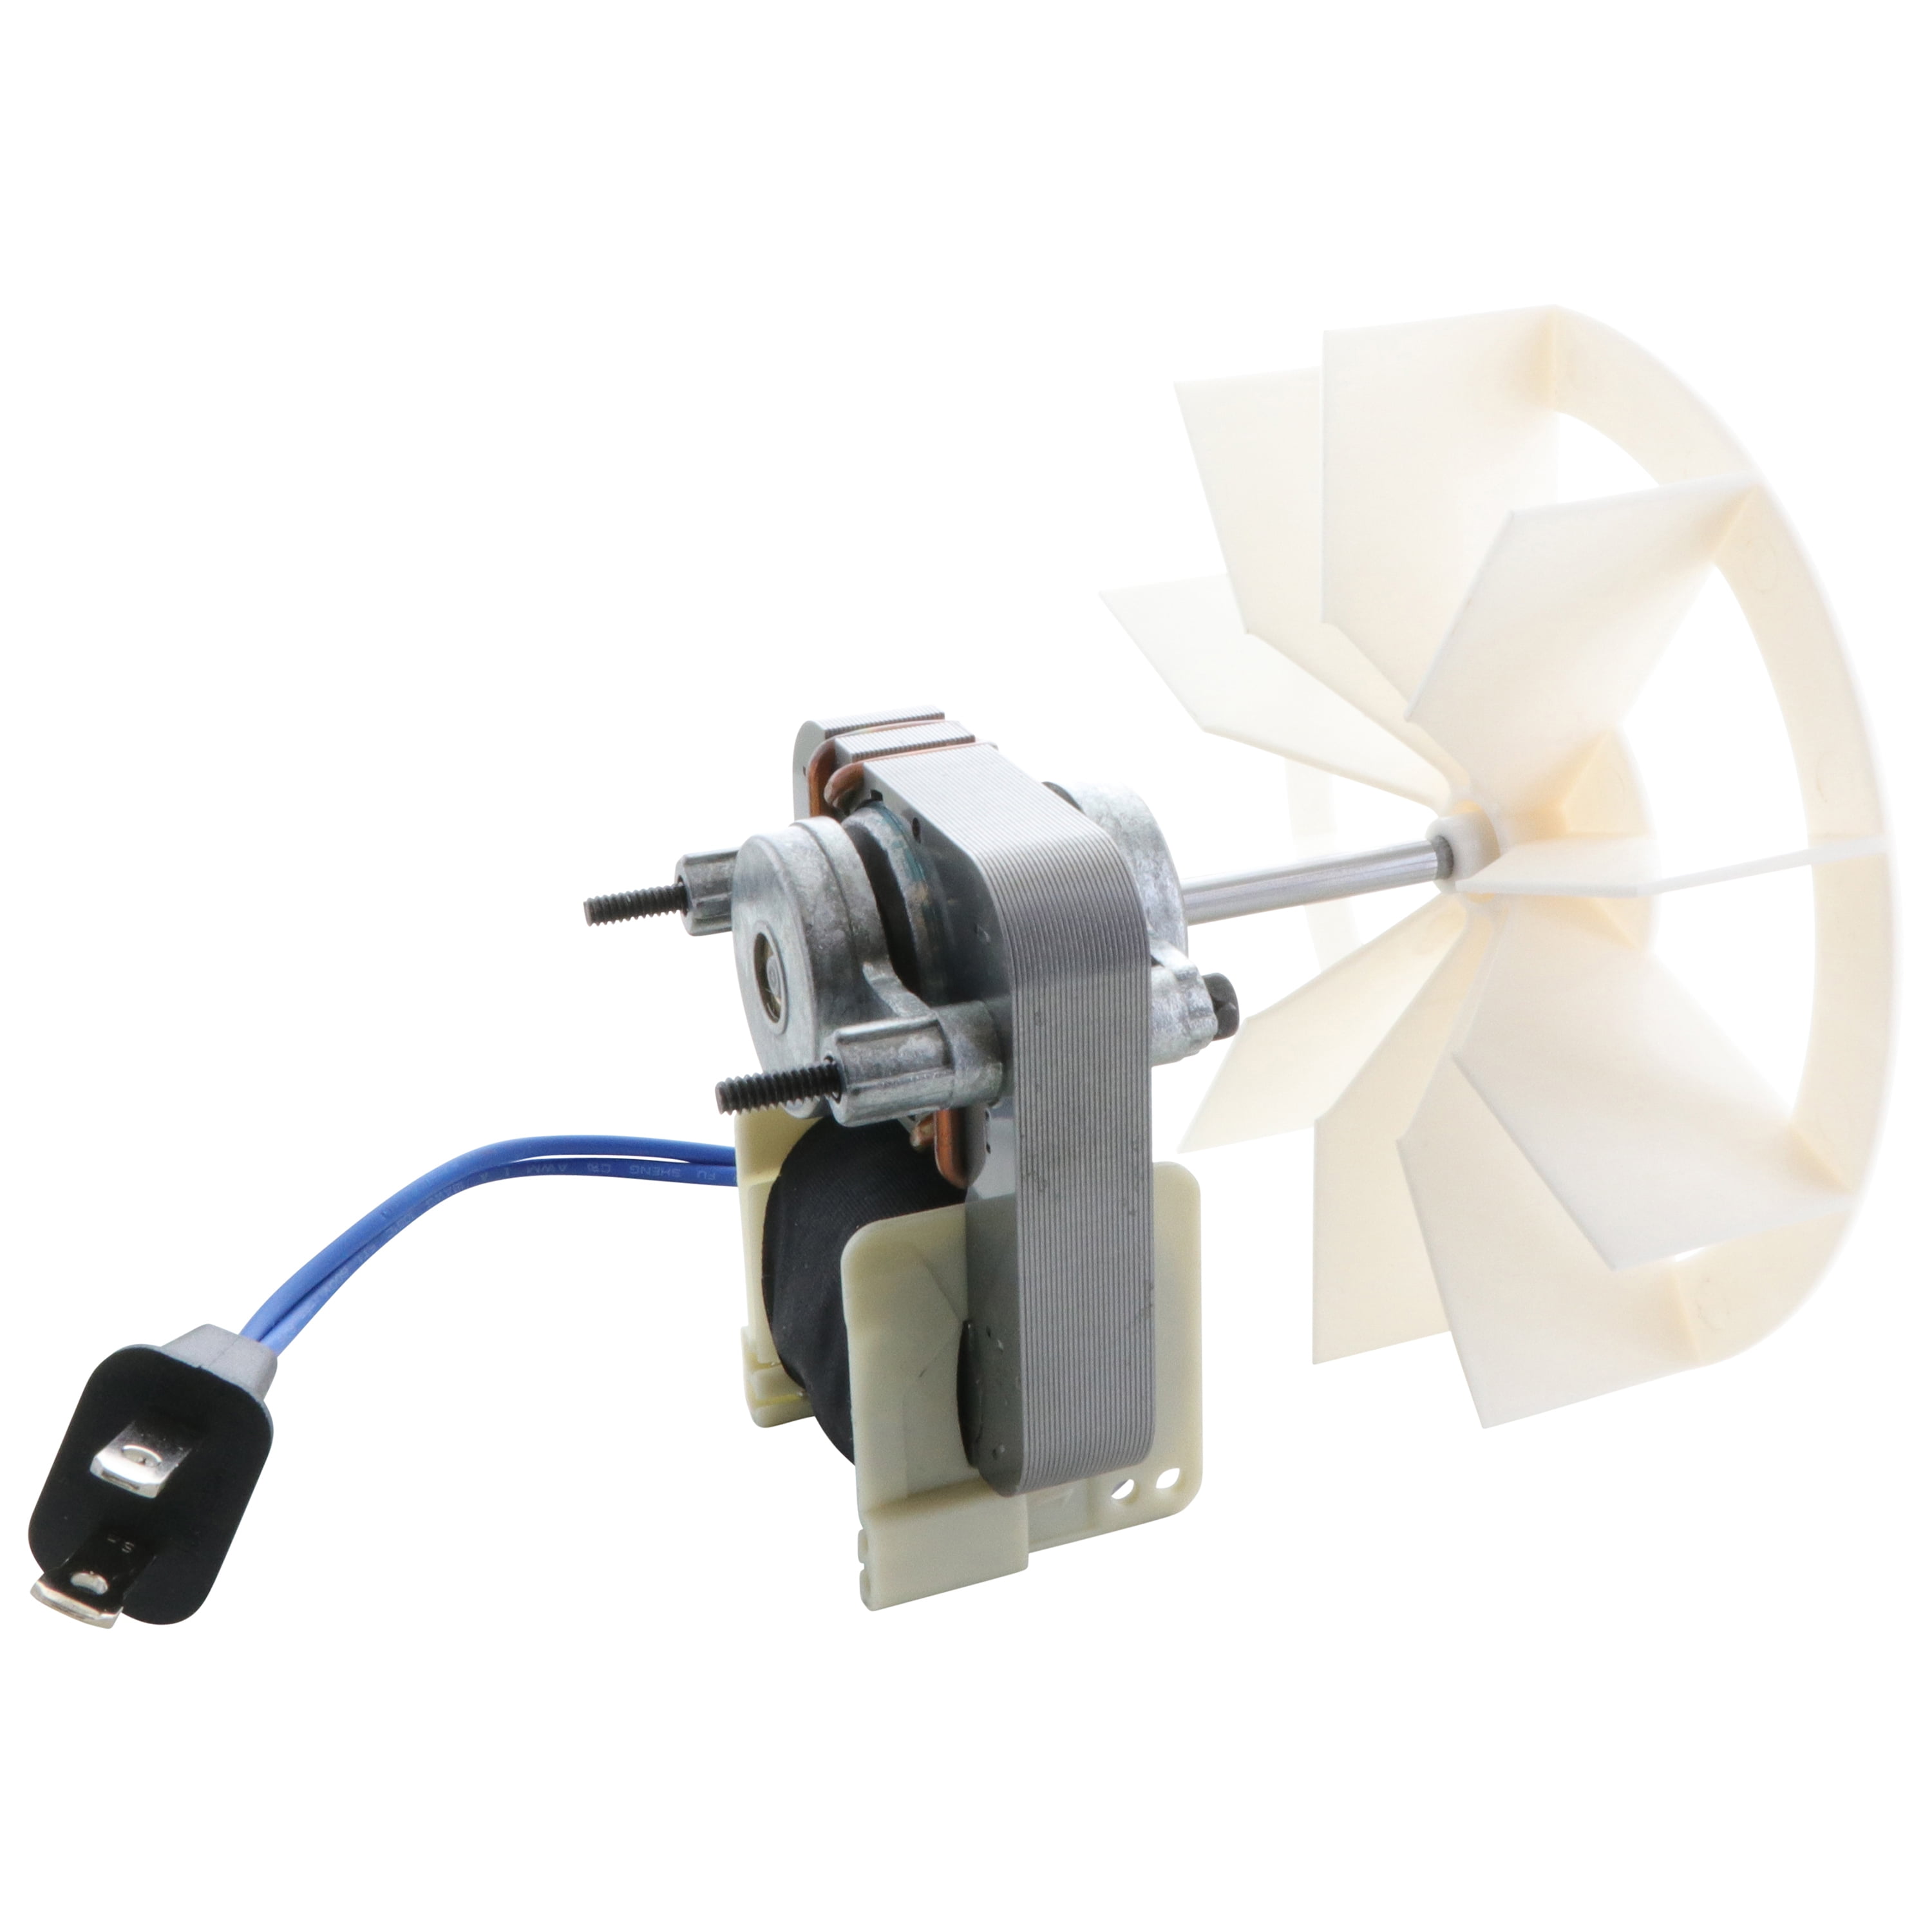 Broan S97012038 Ventilation Fan Motor and Blower Wheel Assembly for sale online 